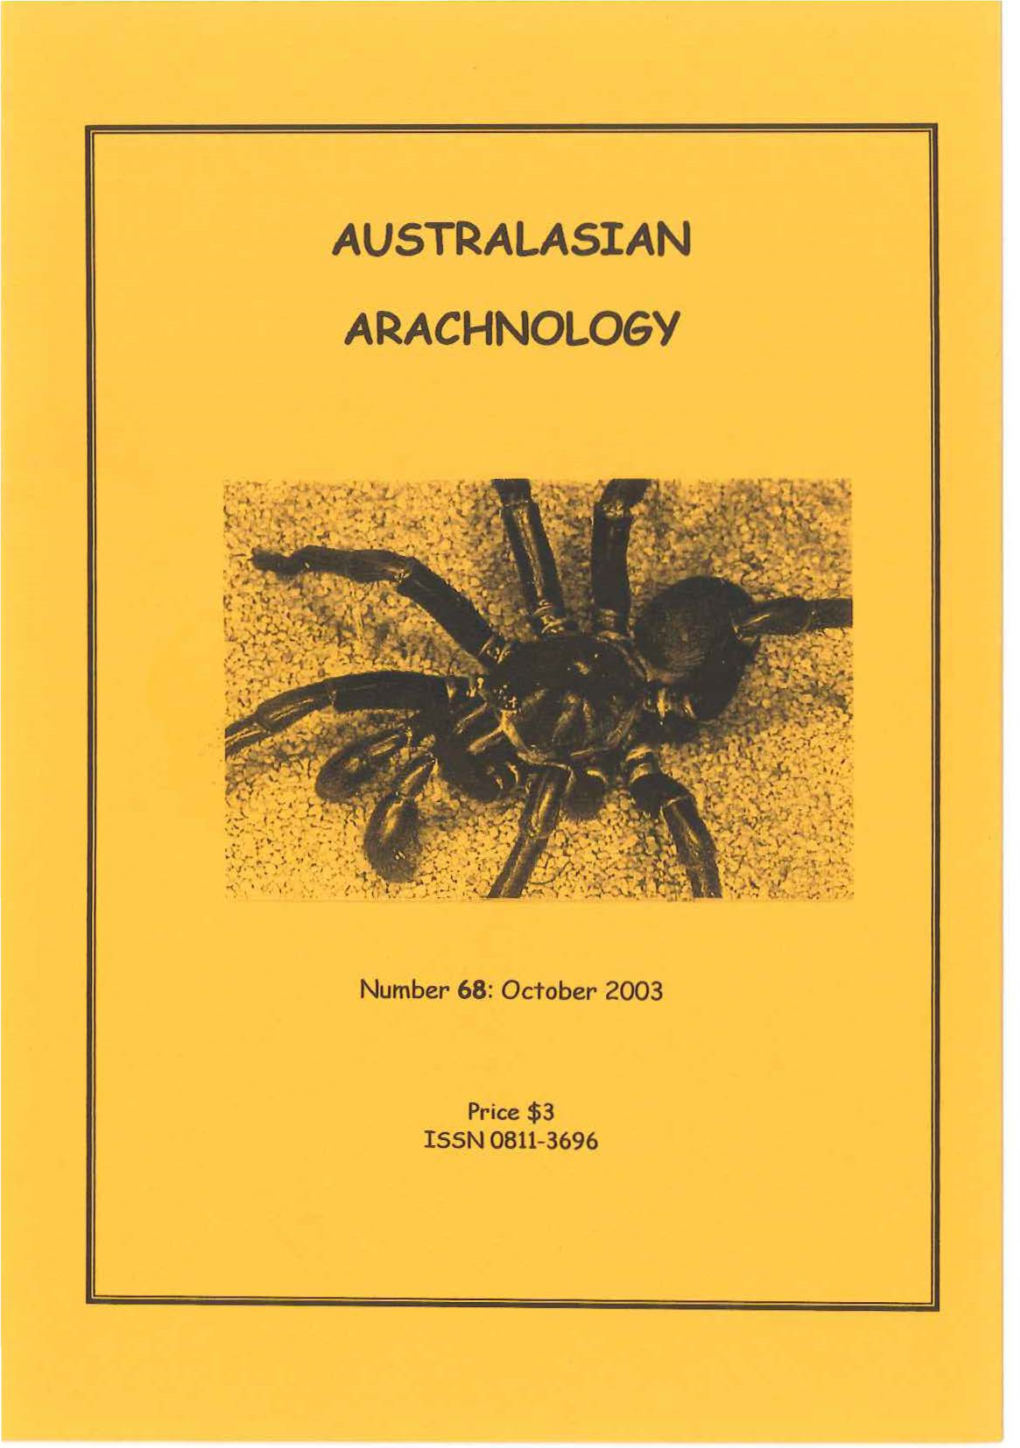 Australasian Arachnology